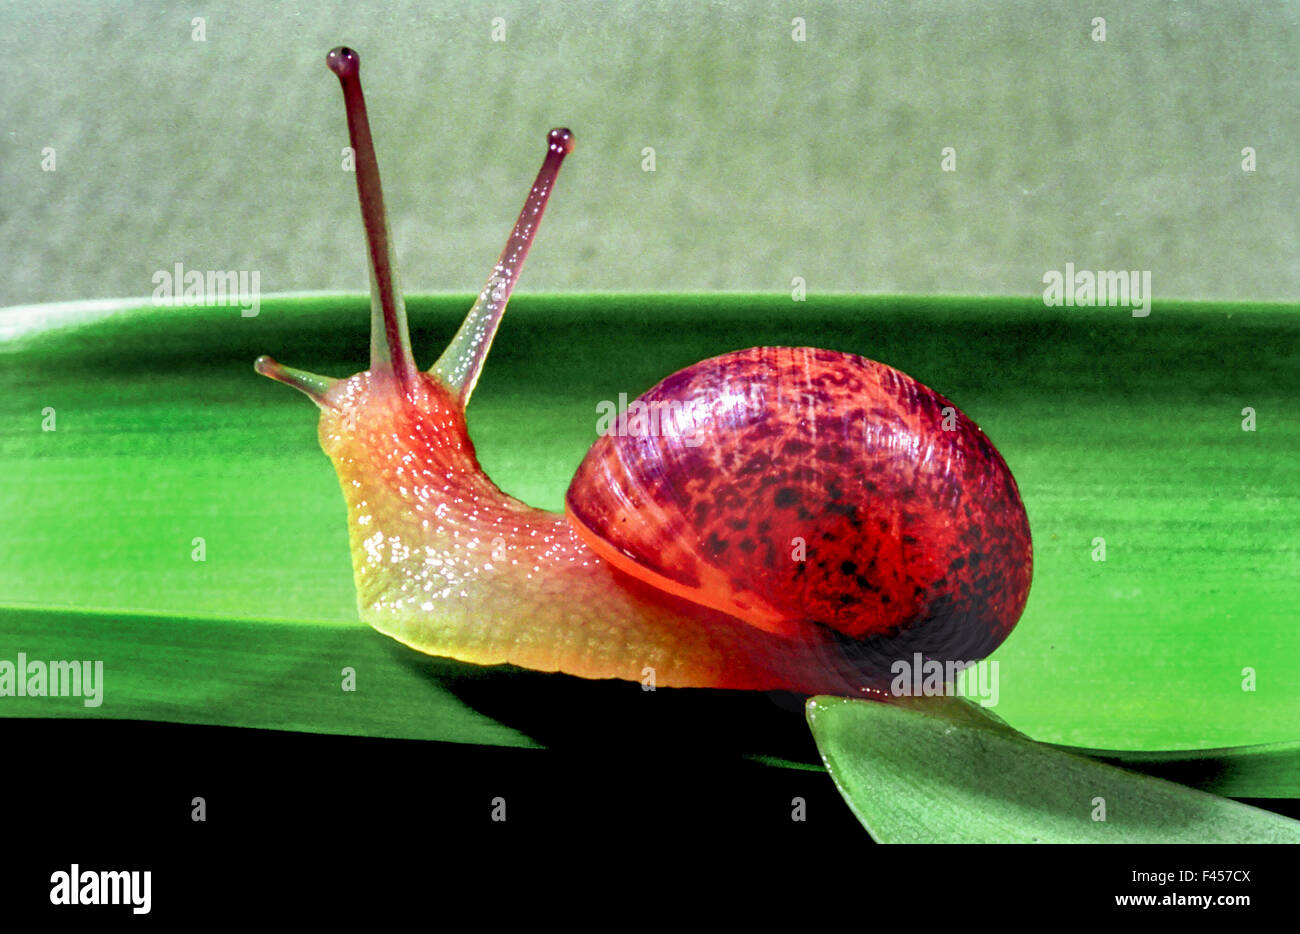 The muscular foot of a Cornu aspersum or garden snail is seen as it crosses a green leaf. It is a terrestrial pulmonate gastropod mollusc in the family Helicidae. Note tentacles on head. Stock Photo